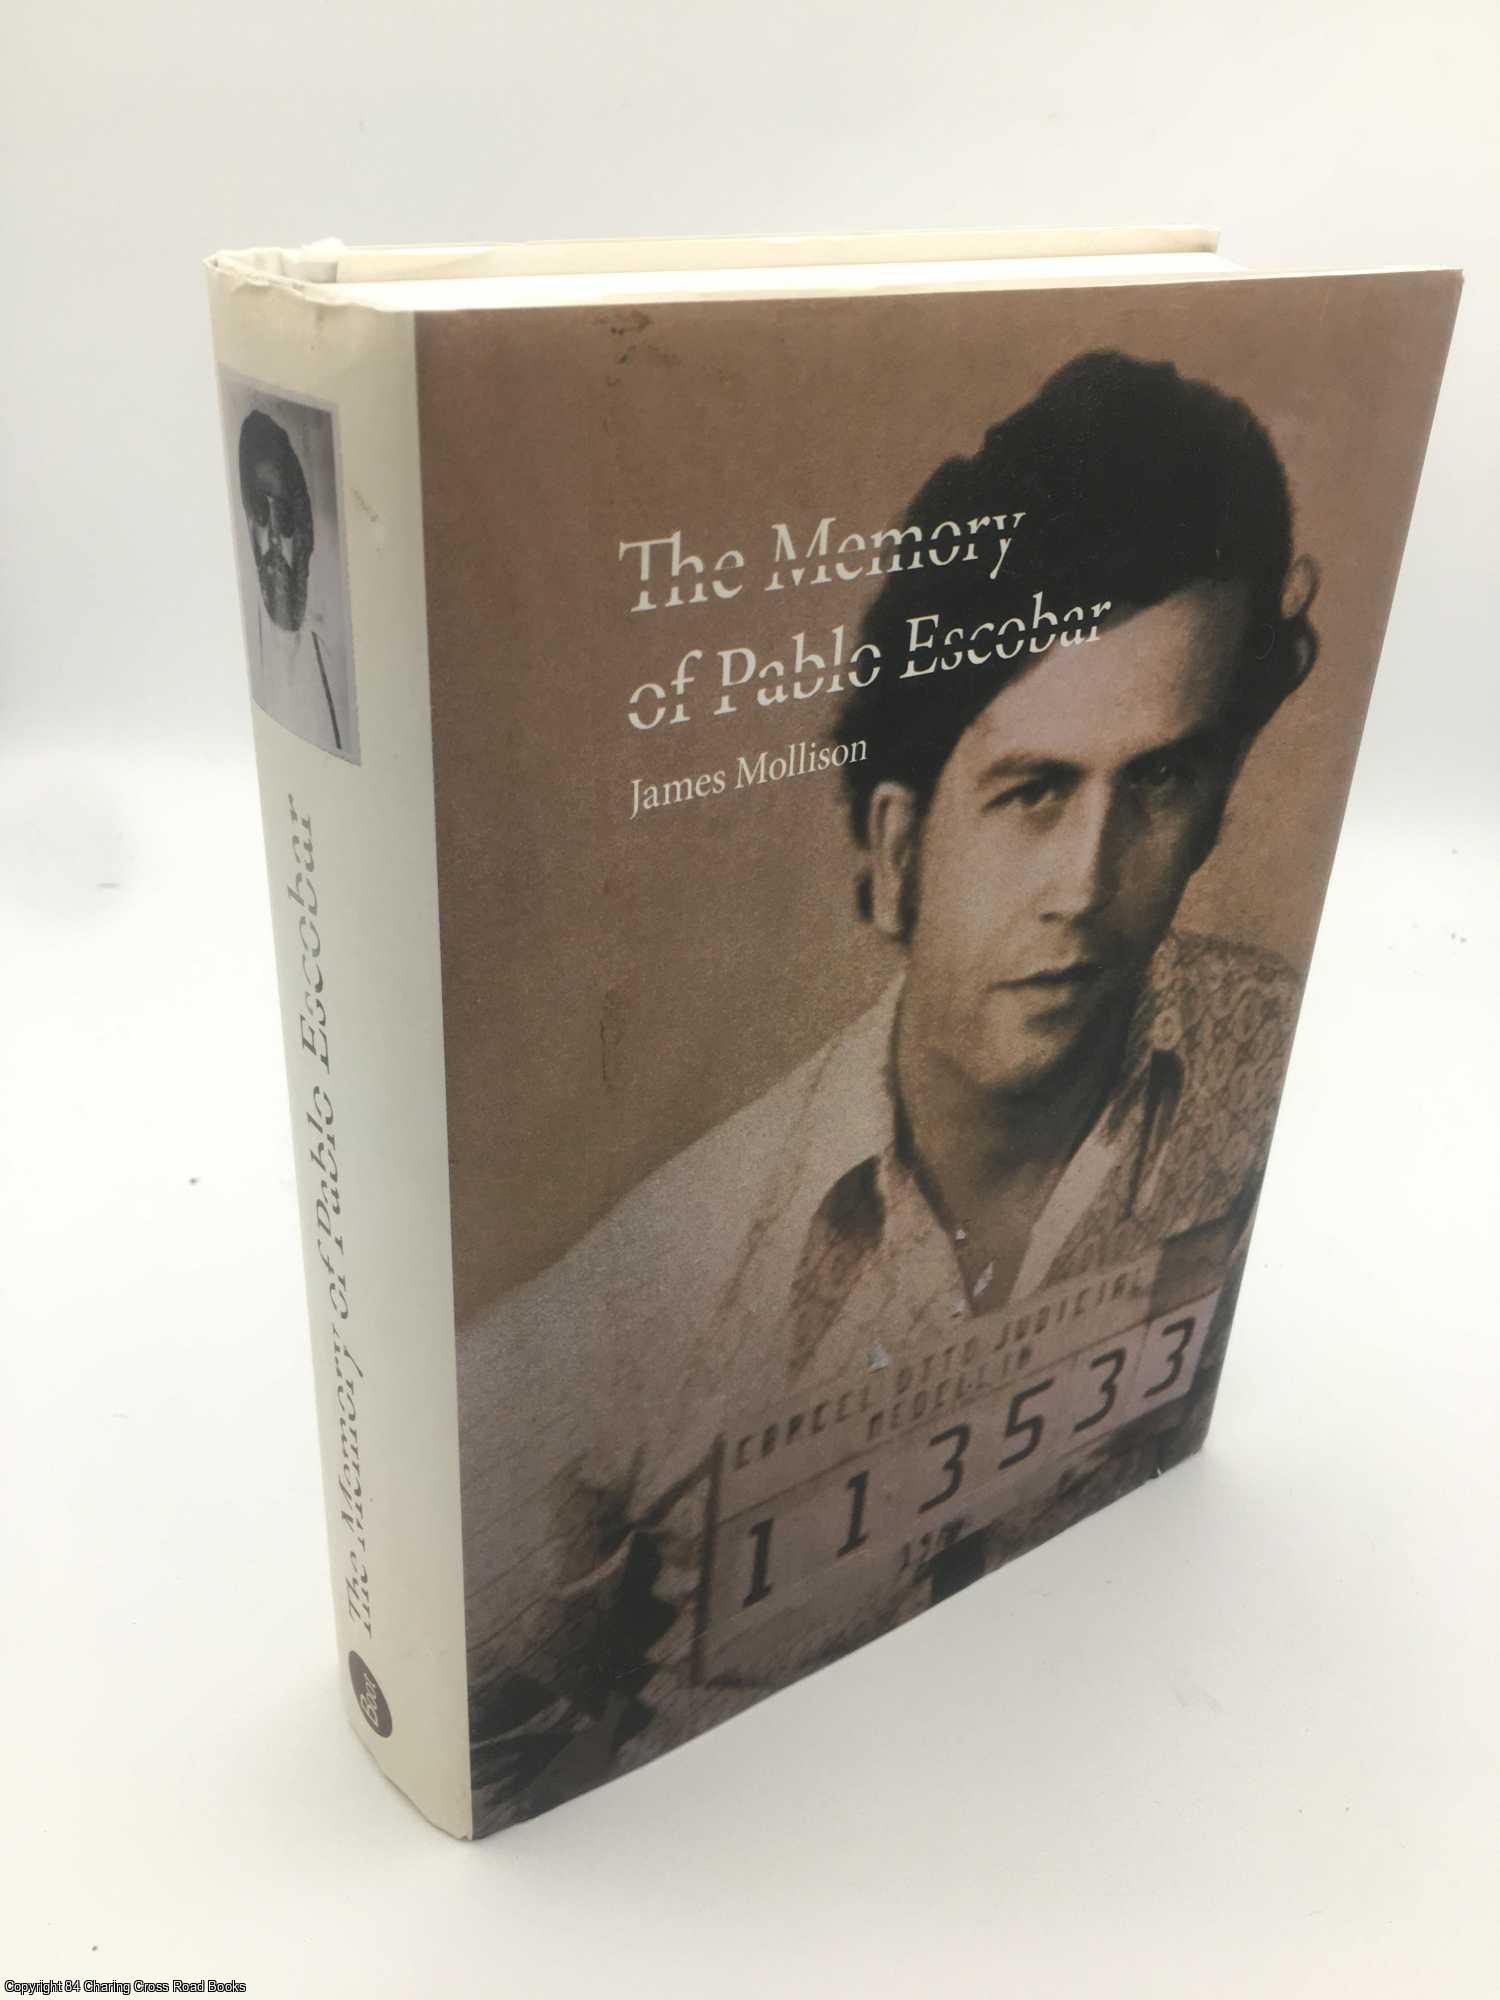 Mollison, James - The Memory of Pablo Escobar